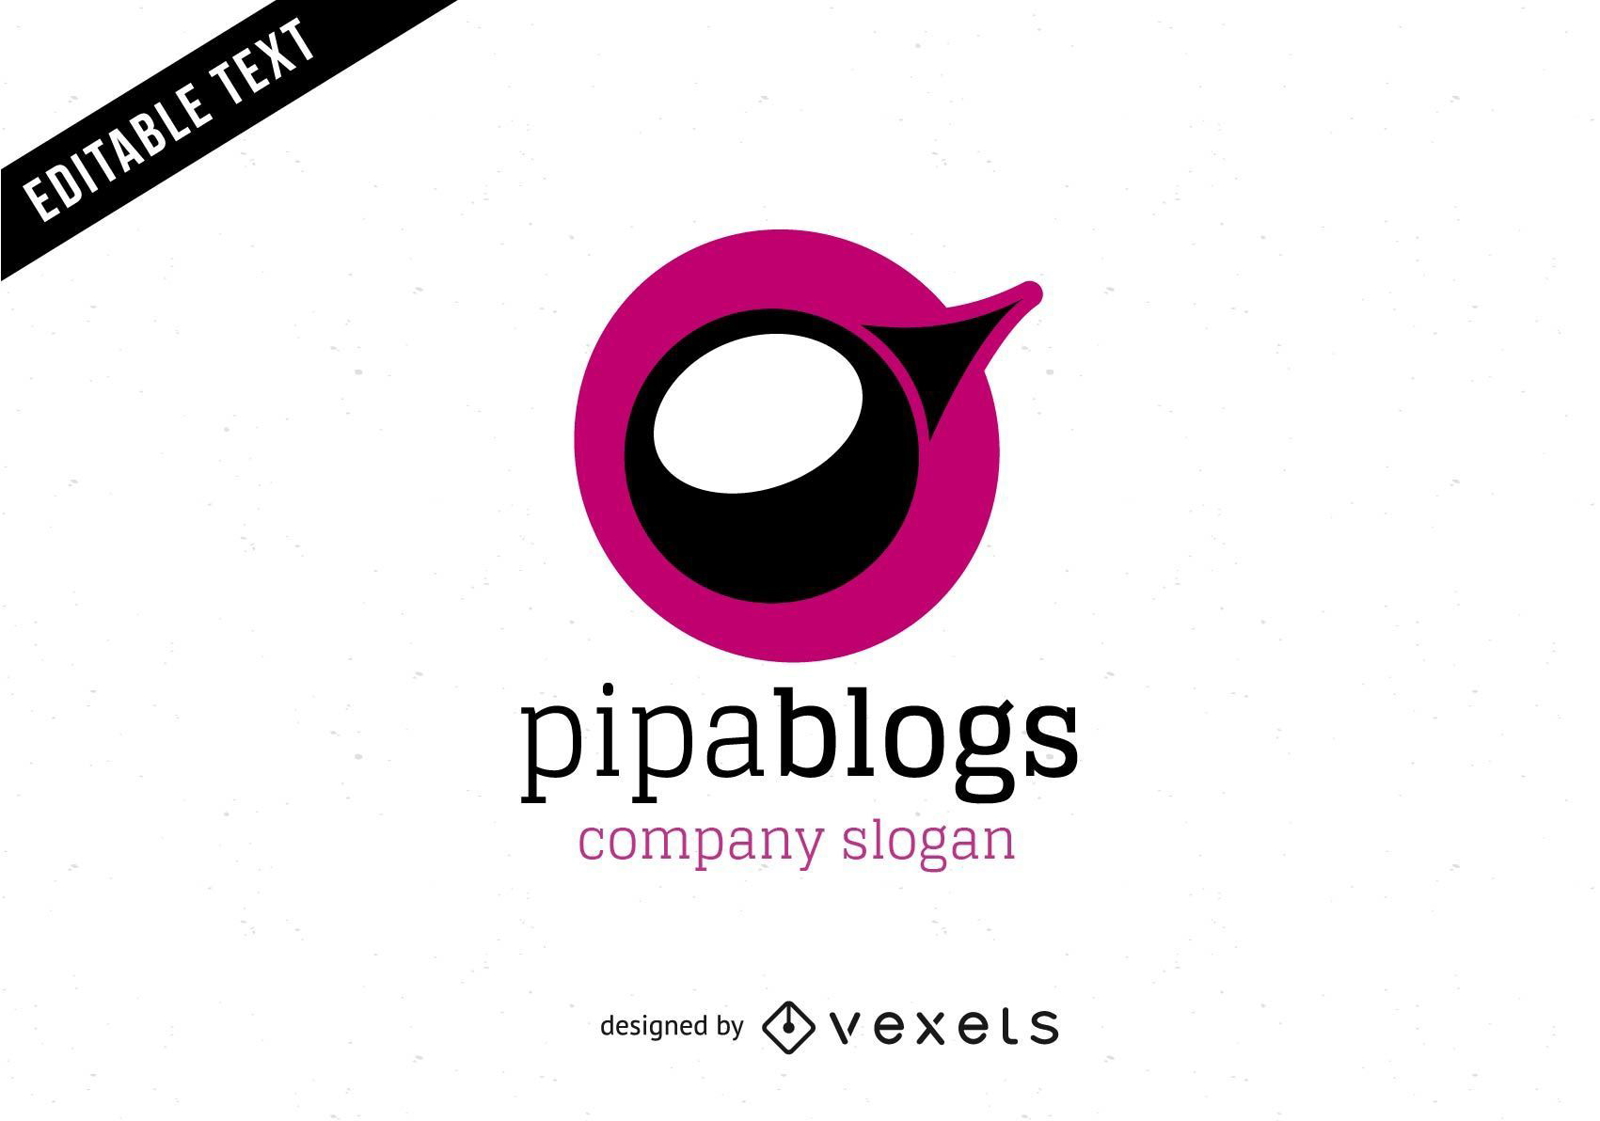 Pipa blogs logo